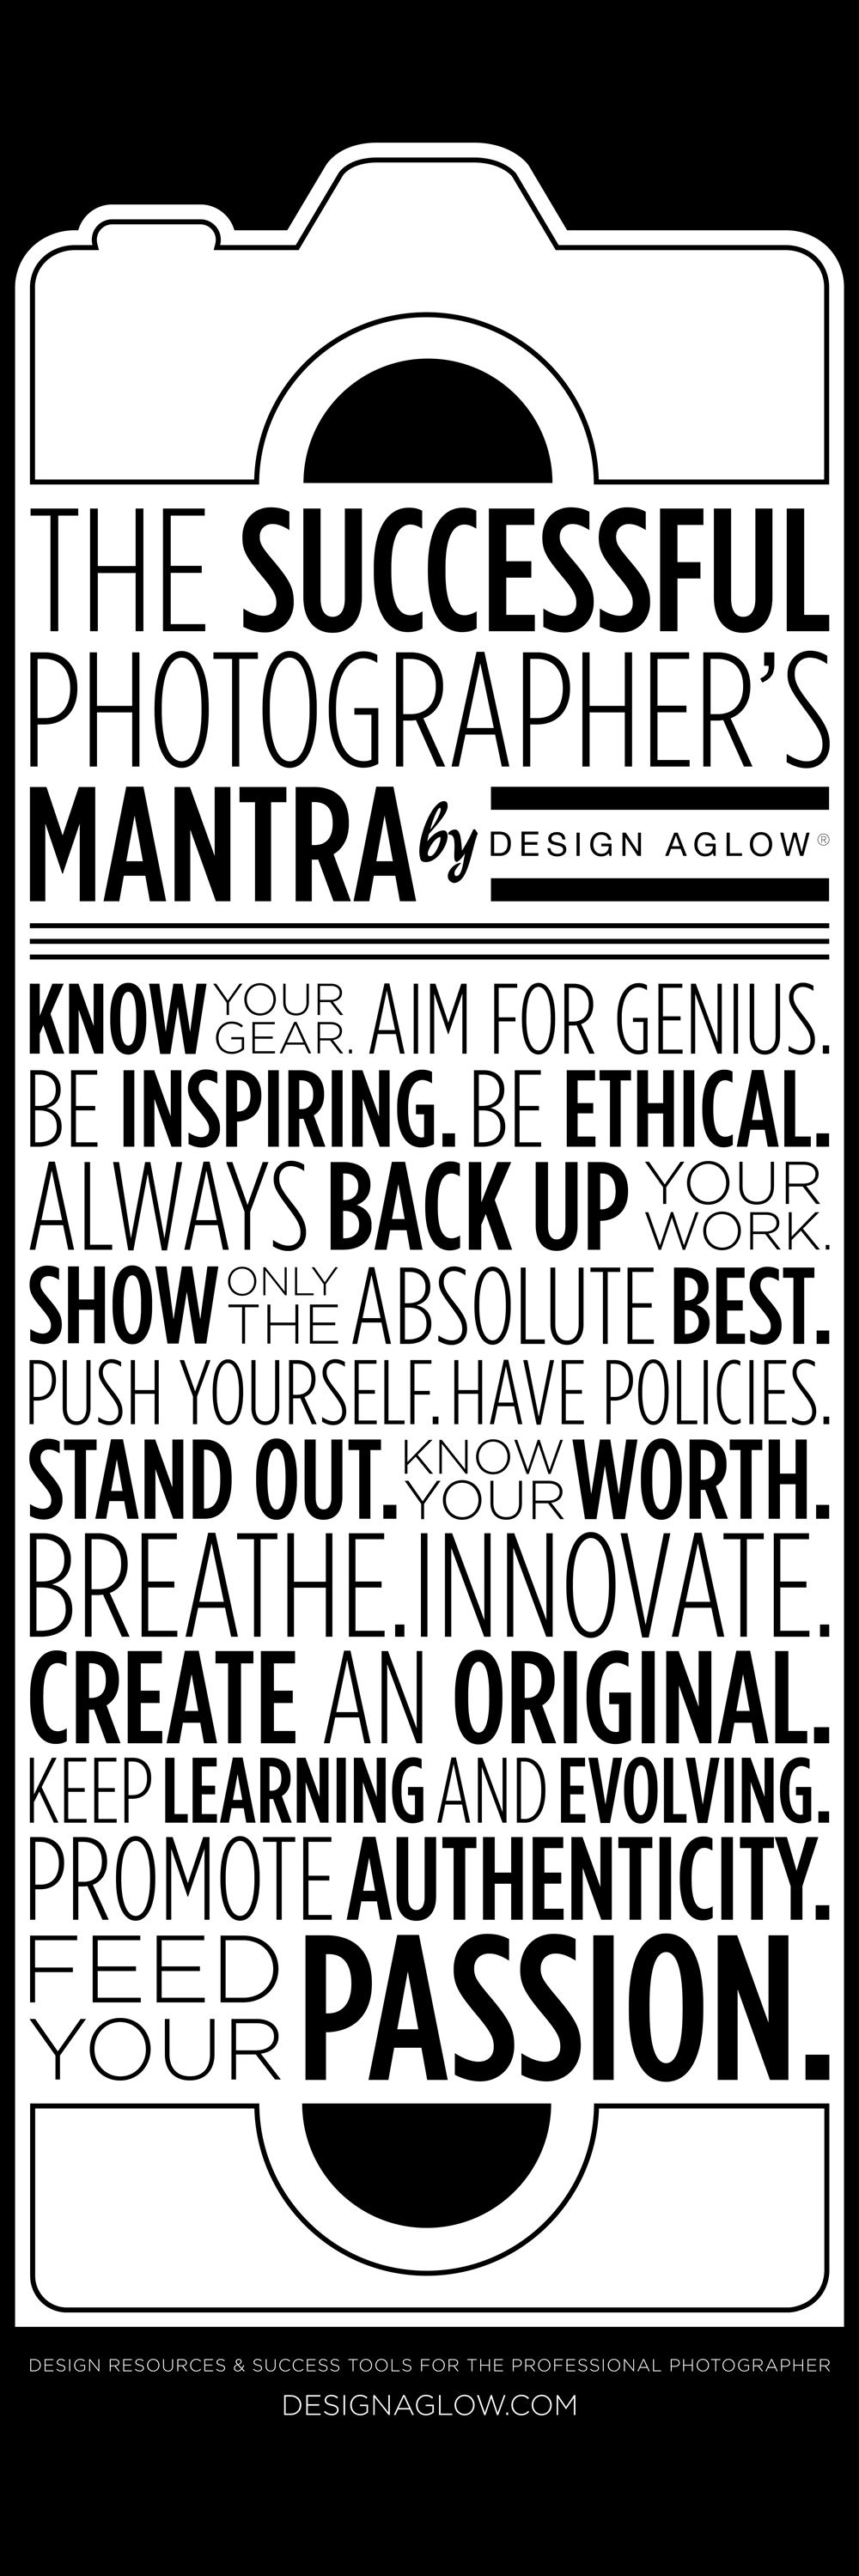 2013 Mantra